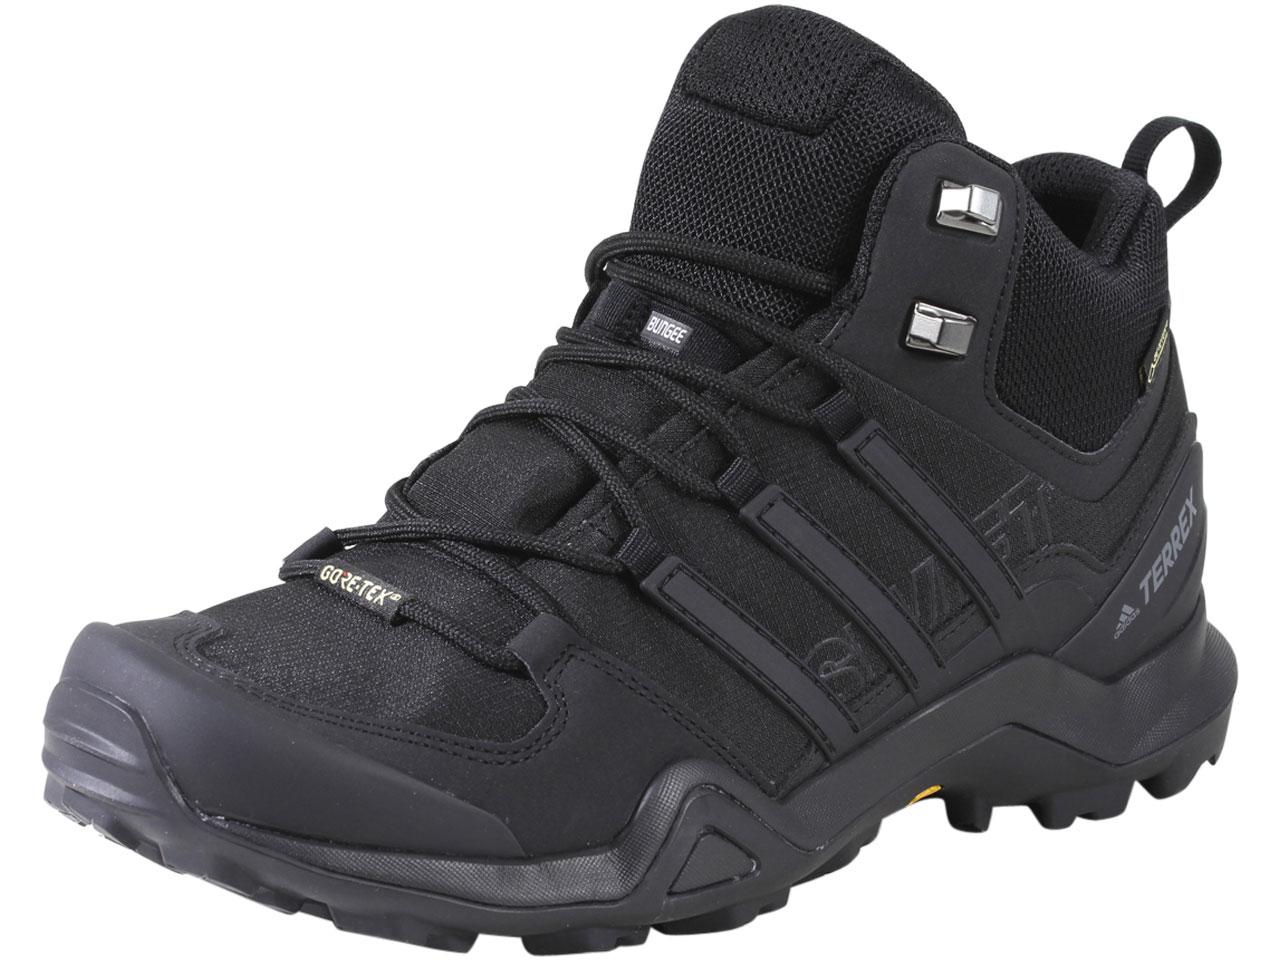 Adidas Men's Terrex Swift R2 GTX Hiking Sneakers Shoes - Black - 10 D(M) US